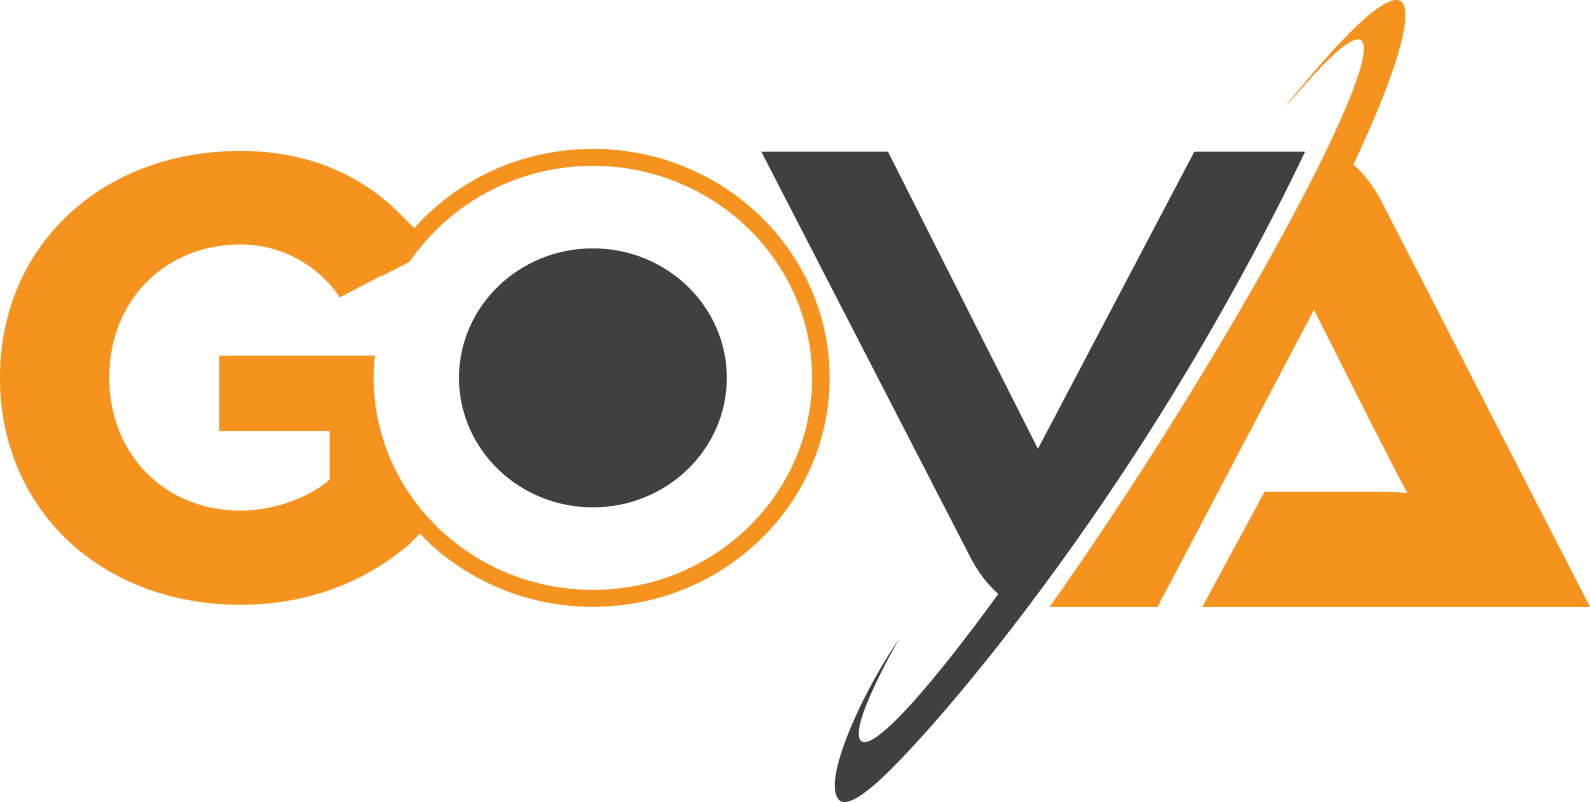 GOVA's logo shows simplicity but sophistication